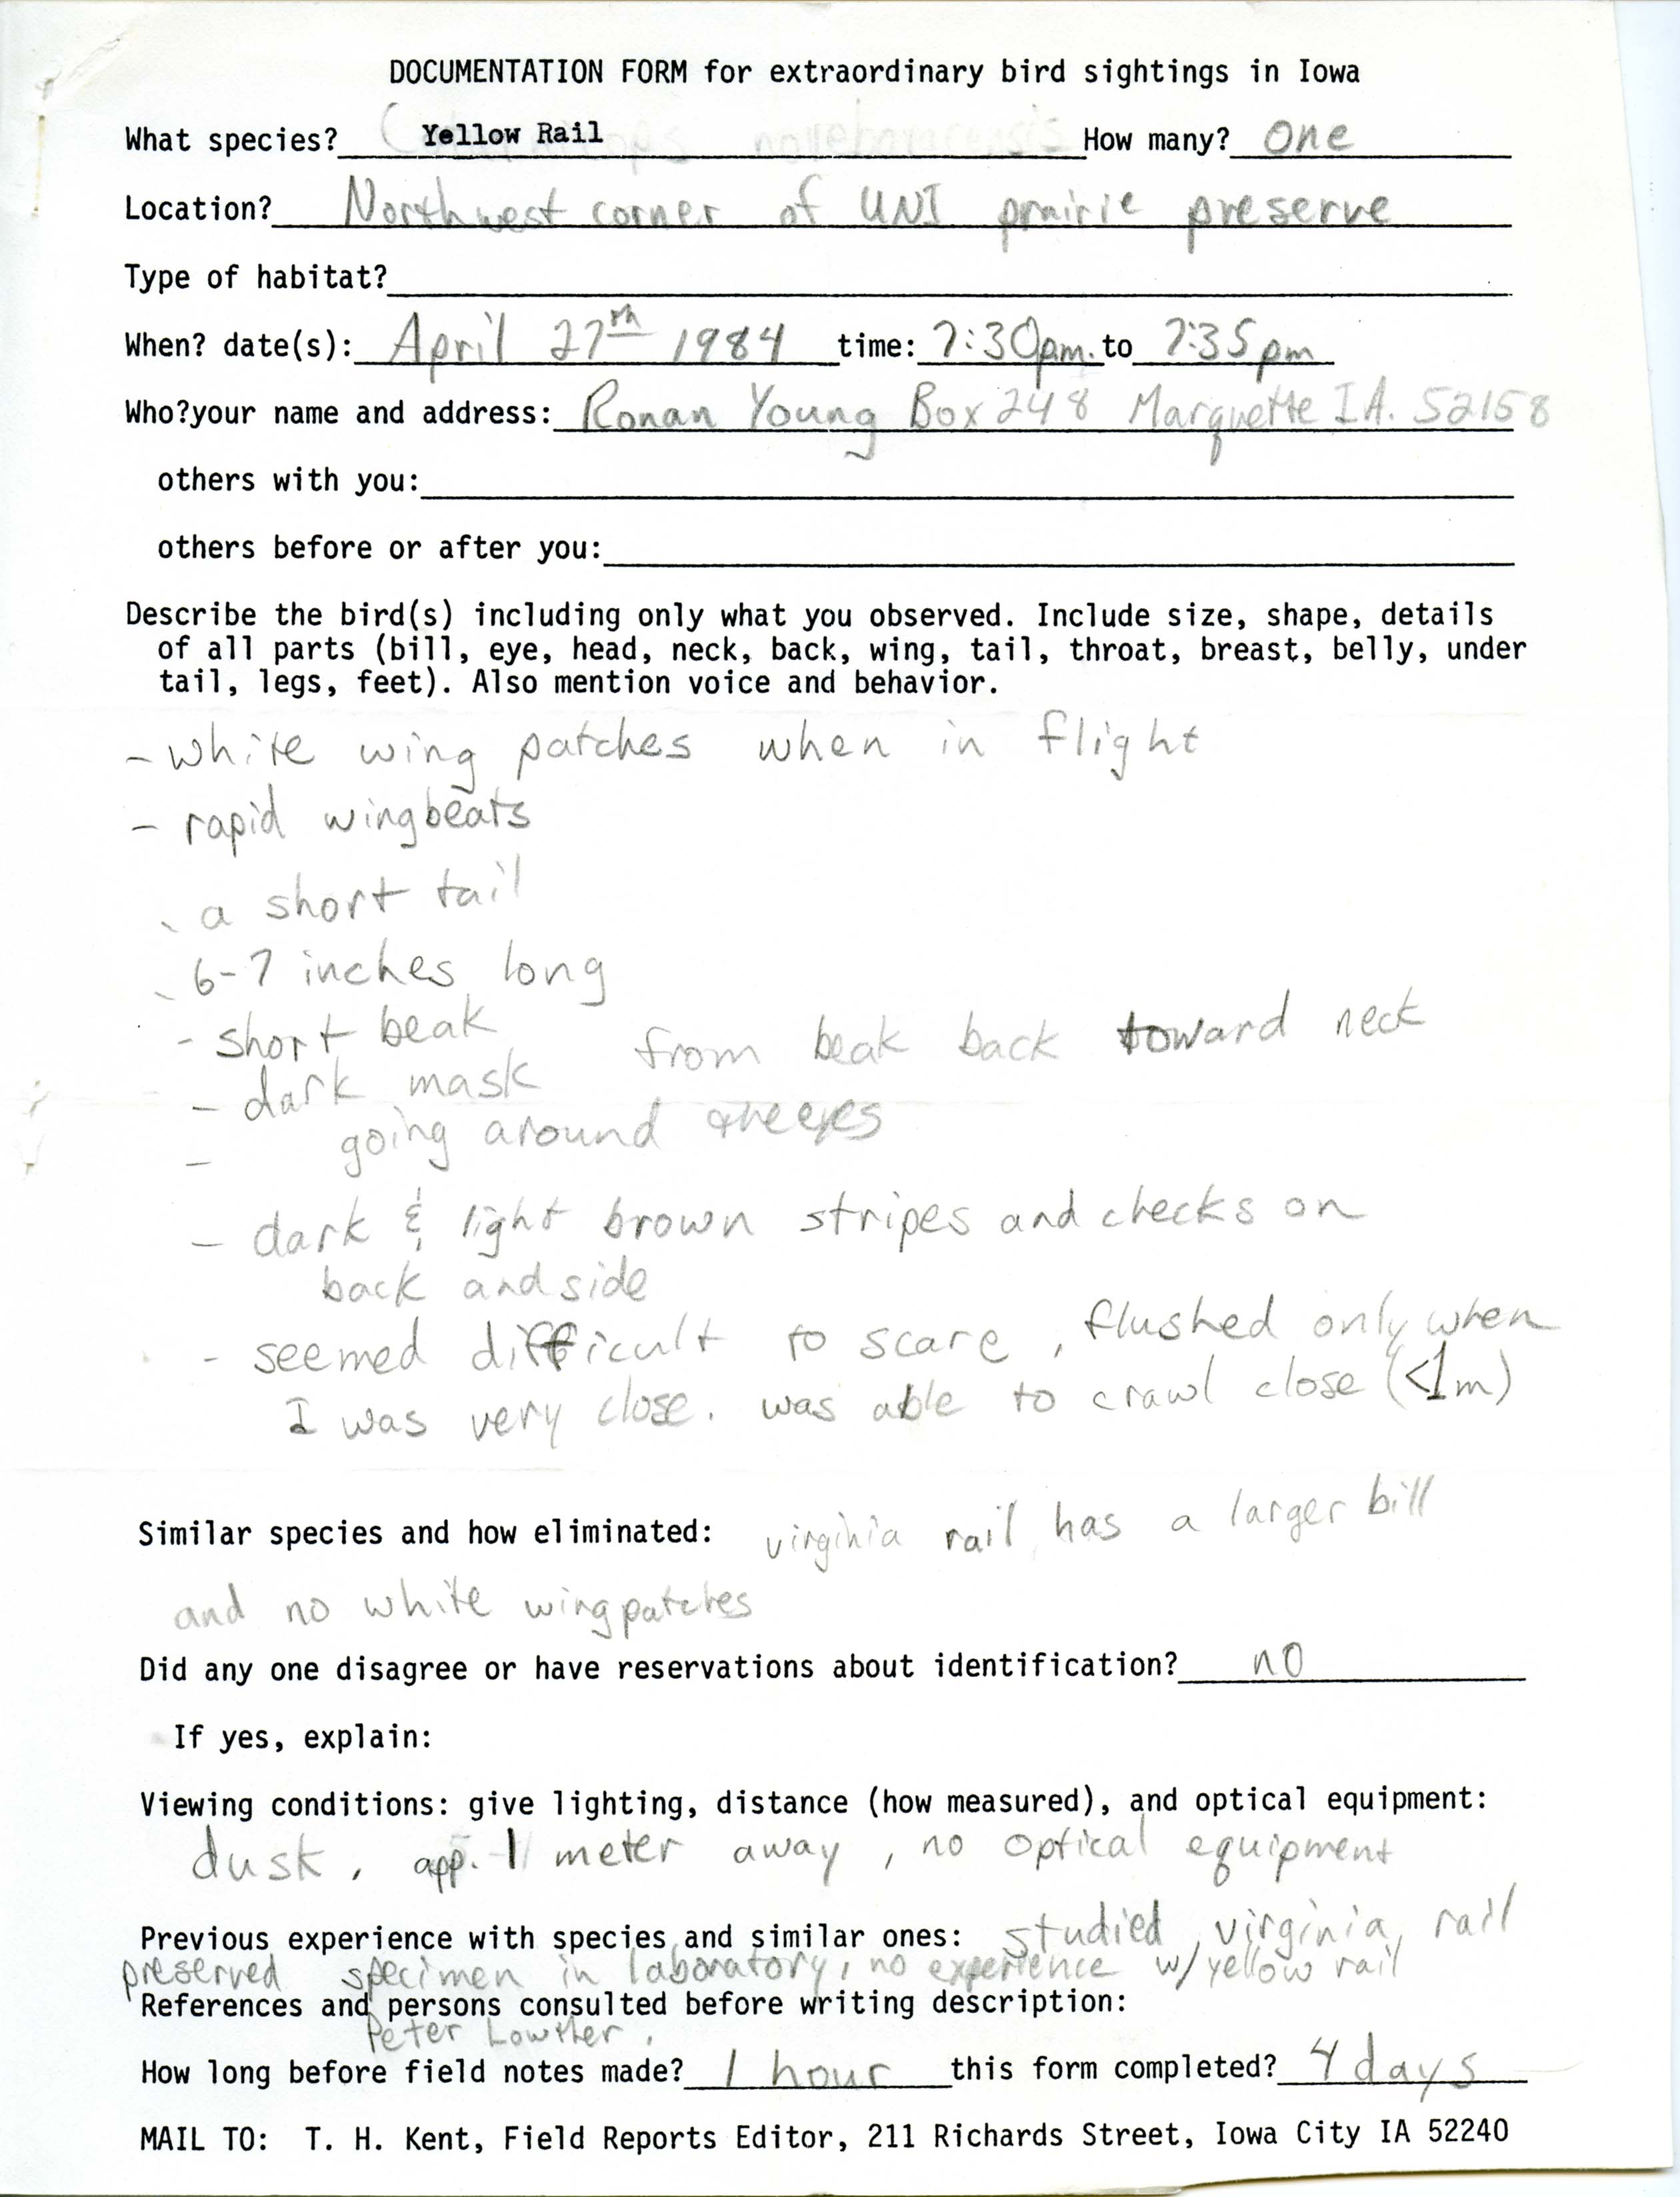 Rare bird documentation form for Yellow Rail at University of Northern Iowa, 1984